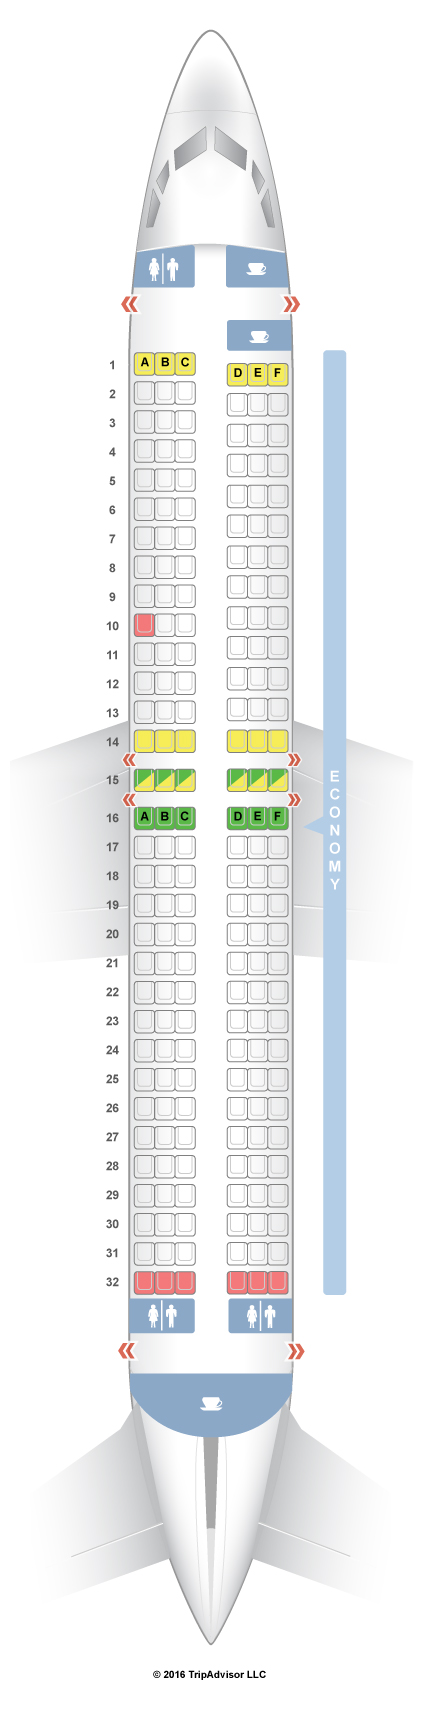 Air India Flight Seating Chart